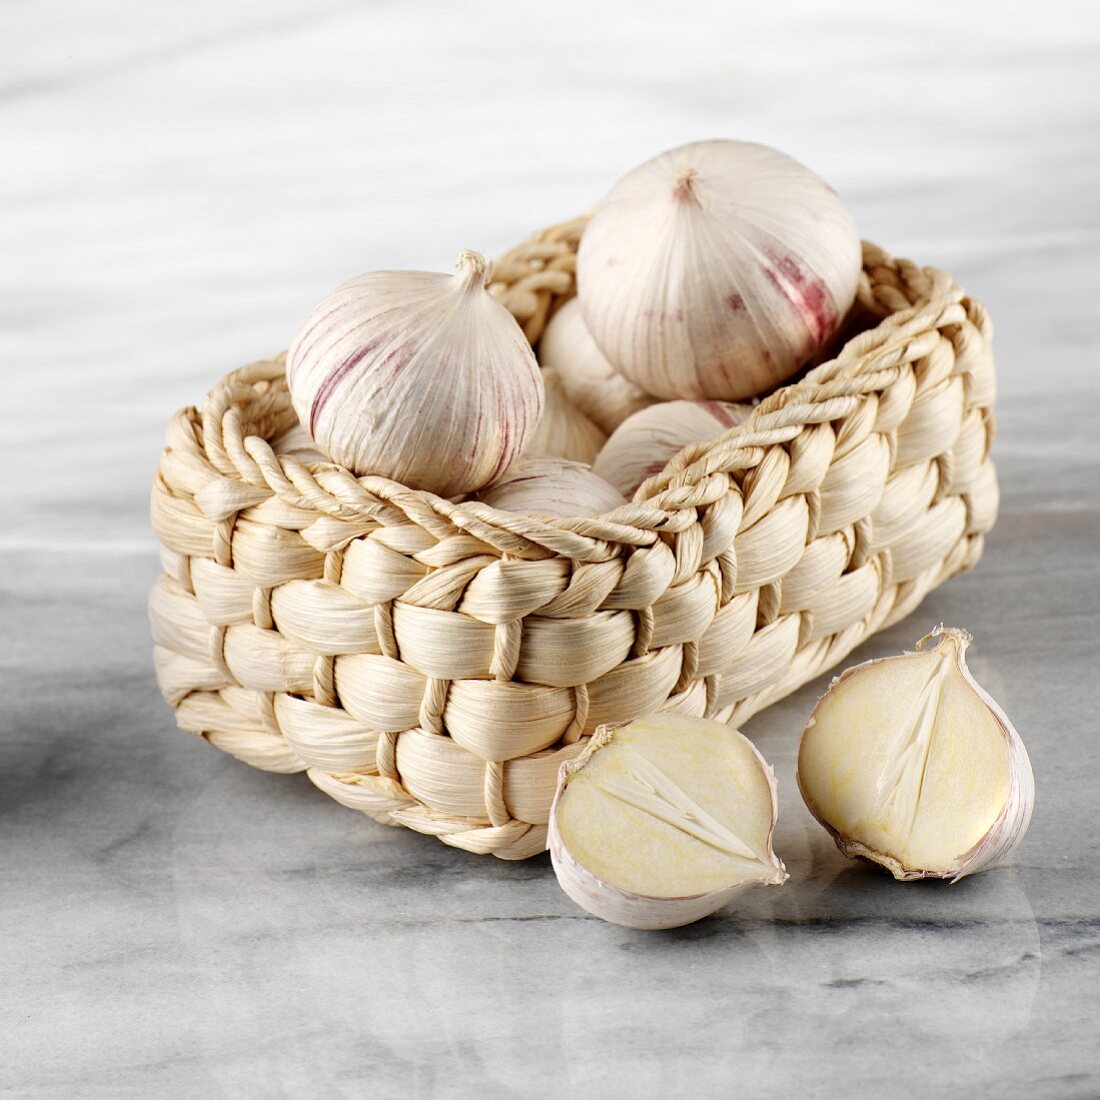 Chinese garlic in basket, one halved